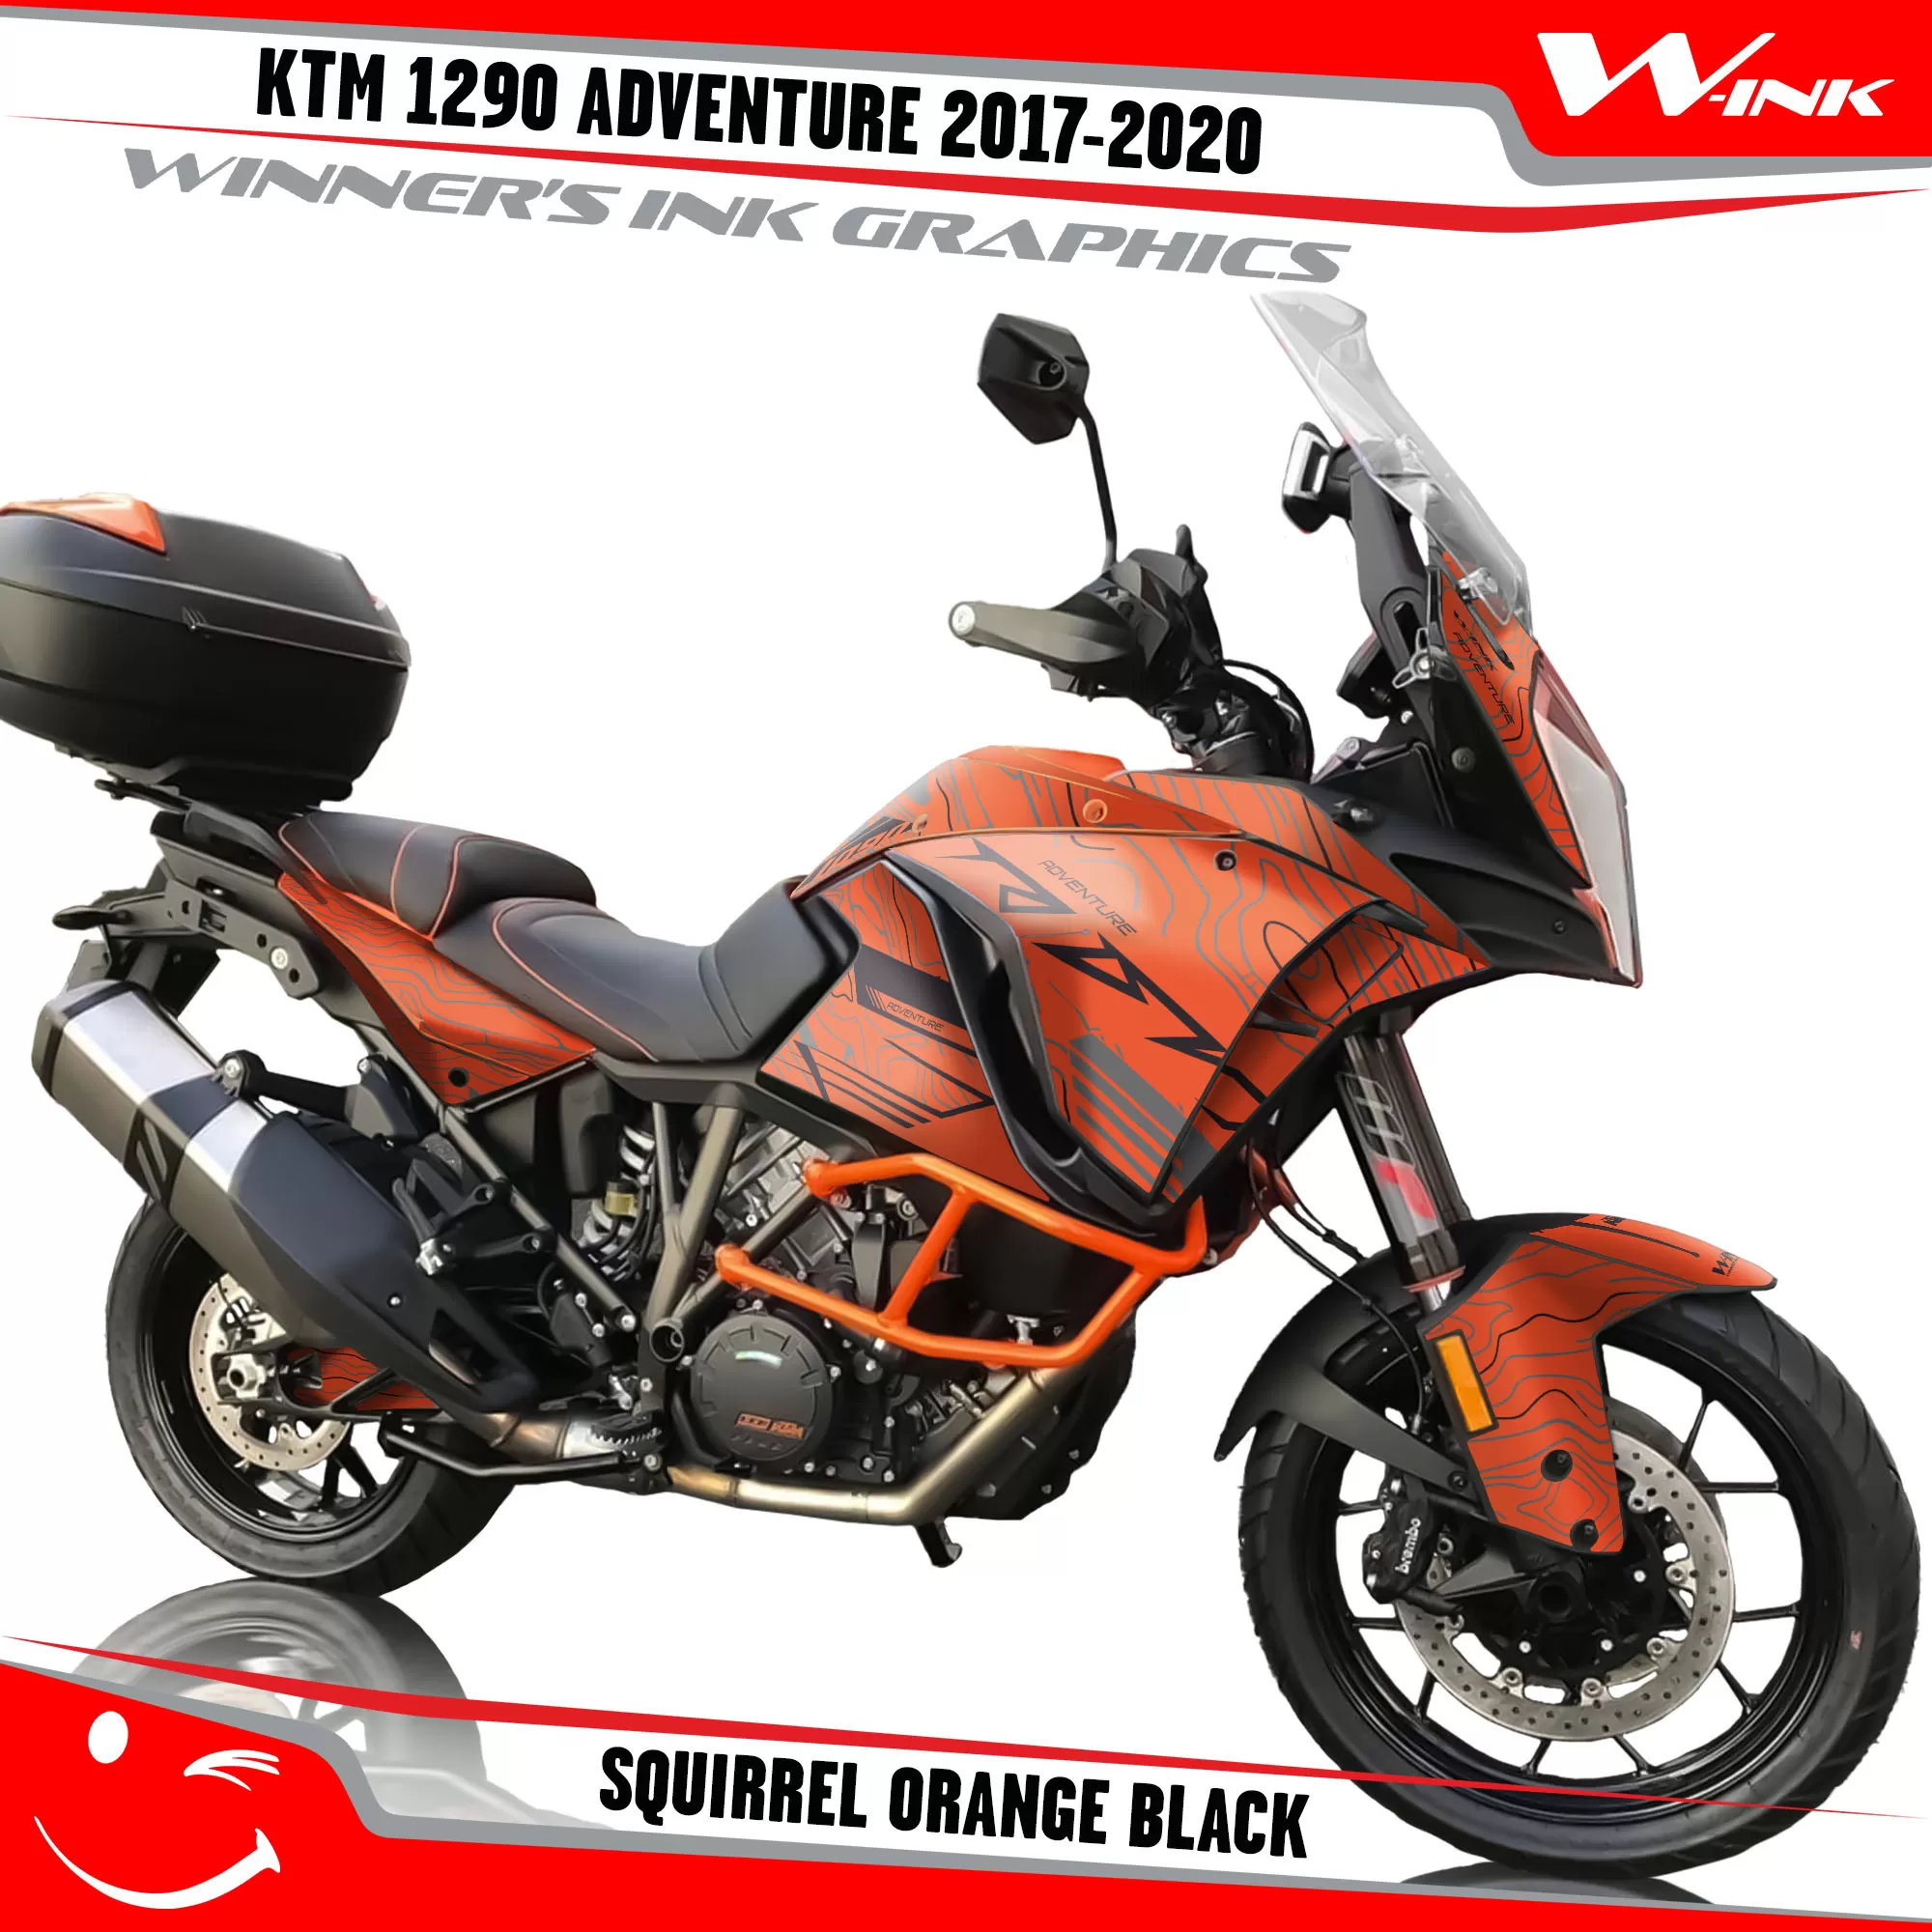 KTM-Adventure-1290-2017-2018-2019-2020-graphics-kit-and-decals-Squirrel-Orange-Black